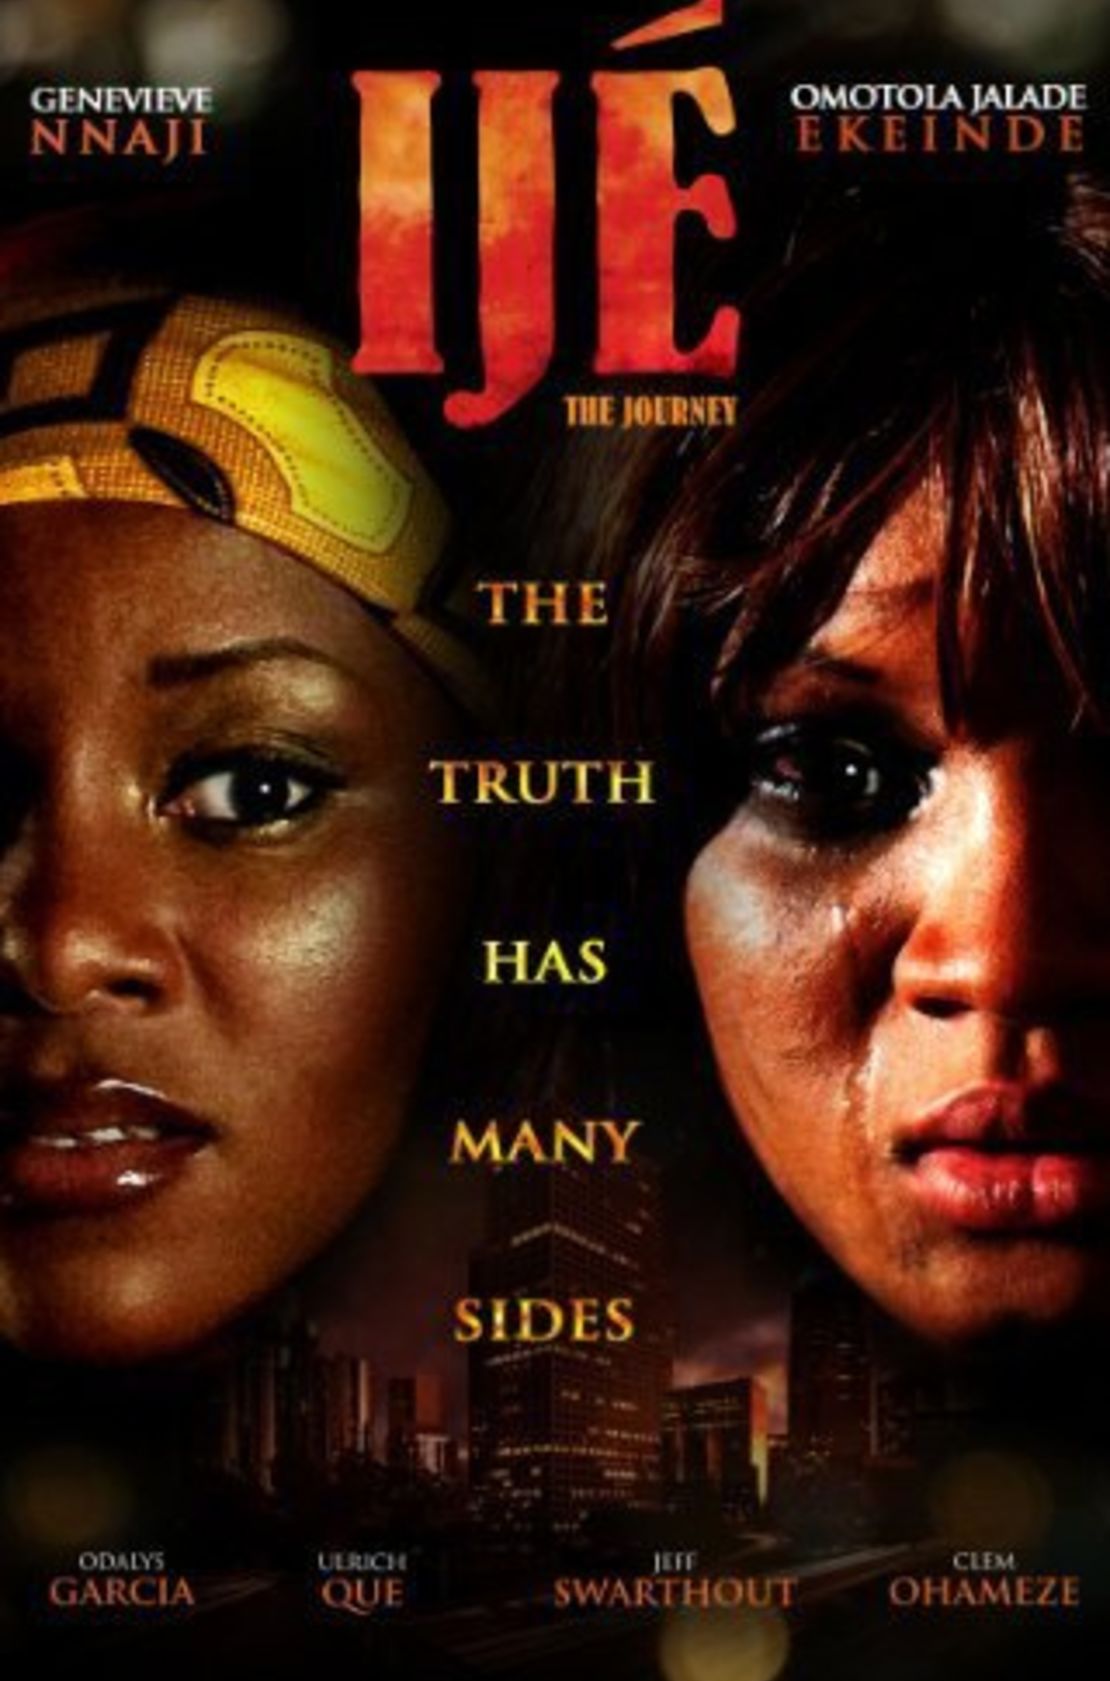 Poster for "Ijé: The Journey" Nollywood's highest grossing film so far.